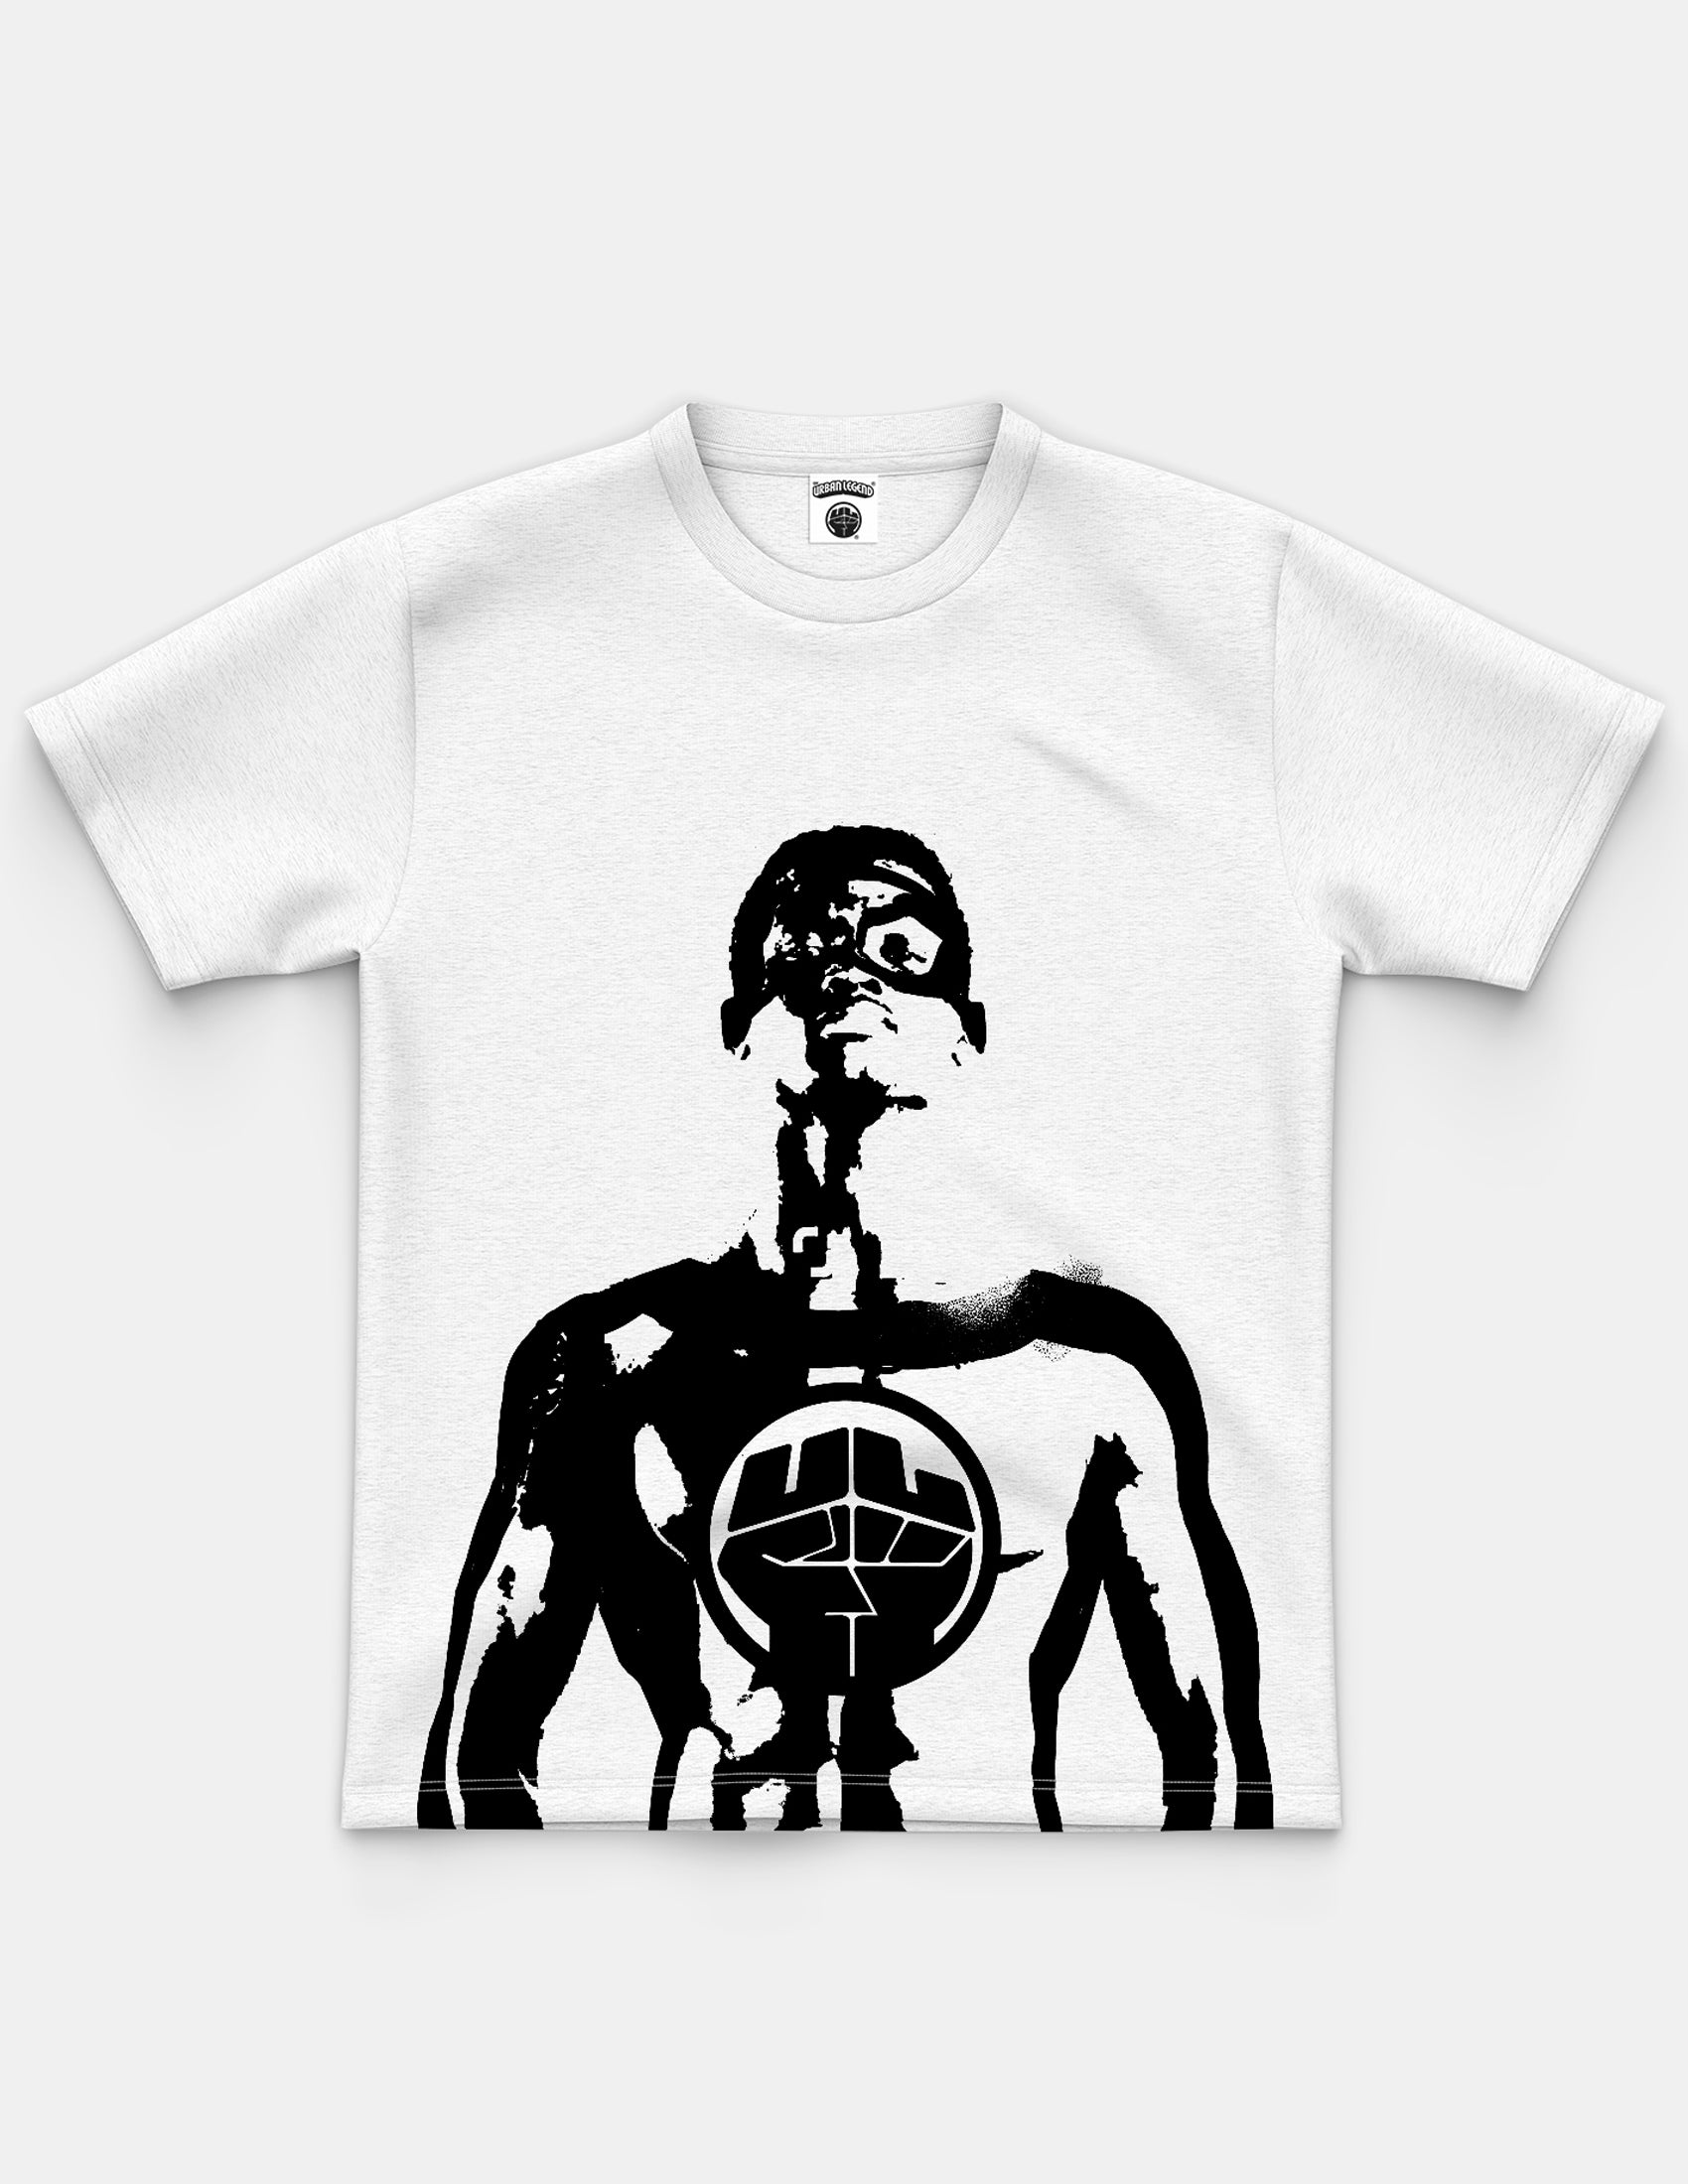 The Urban Legend - Stencil T-shirt